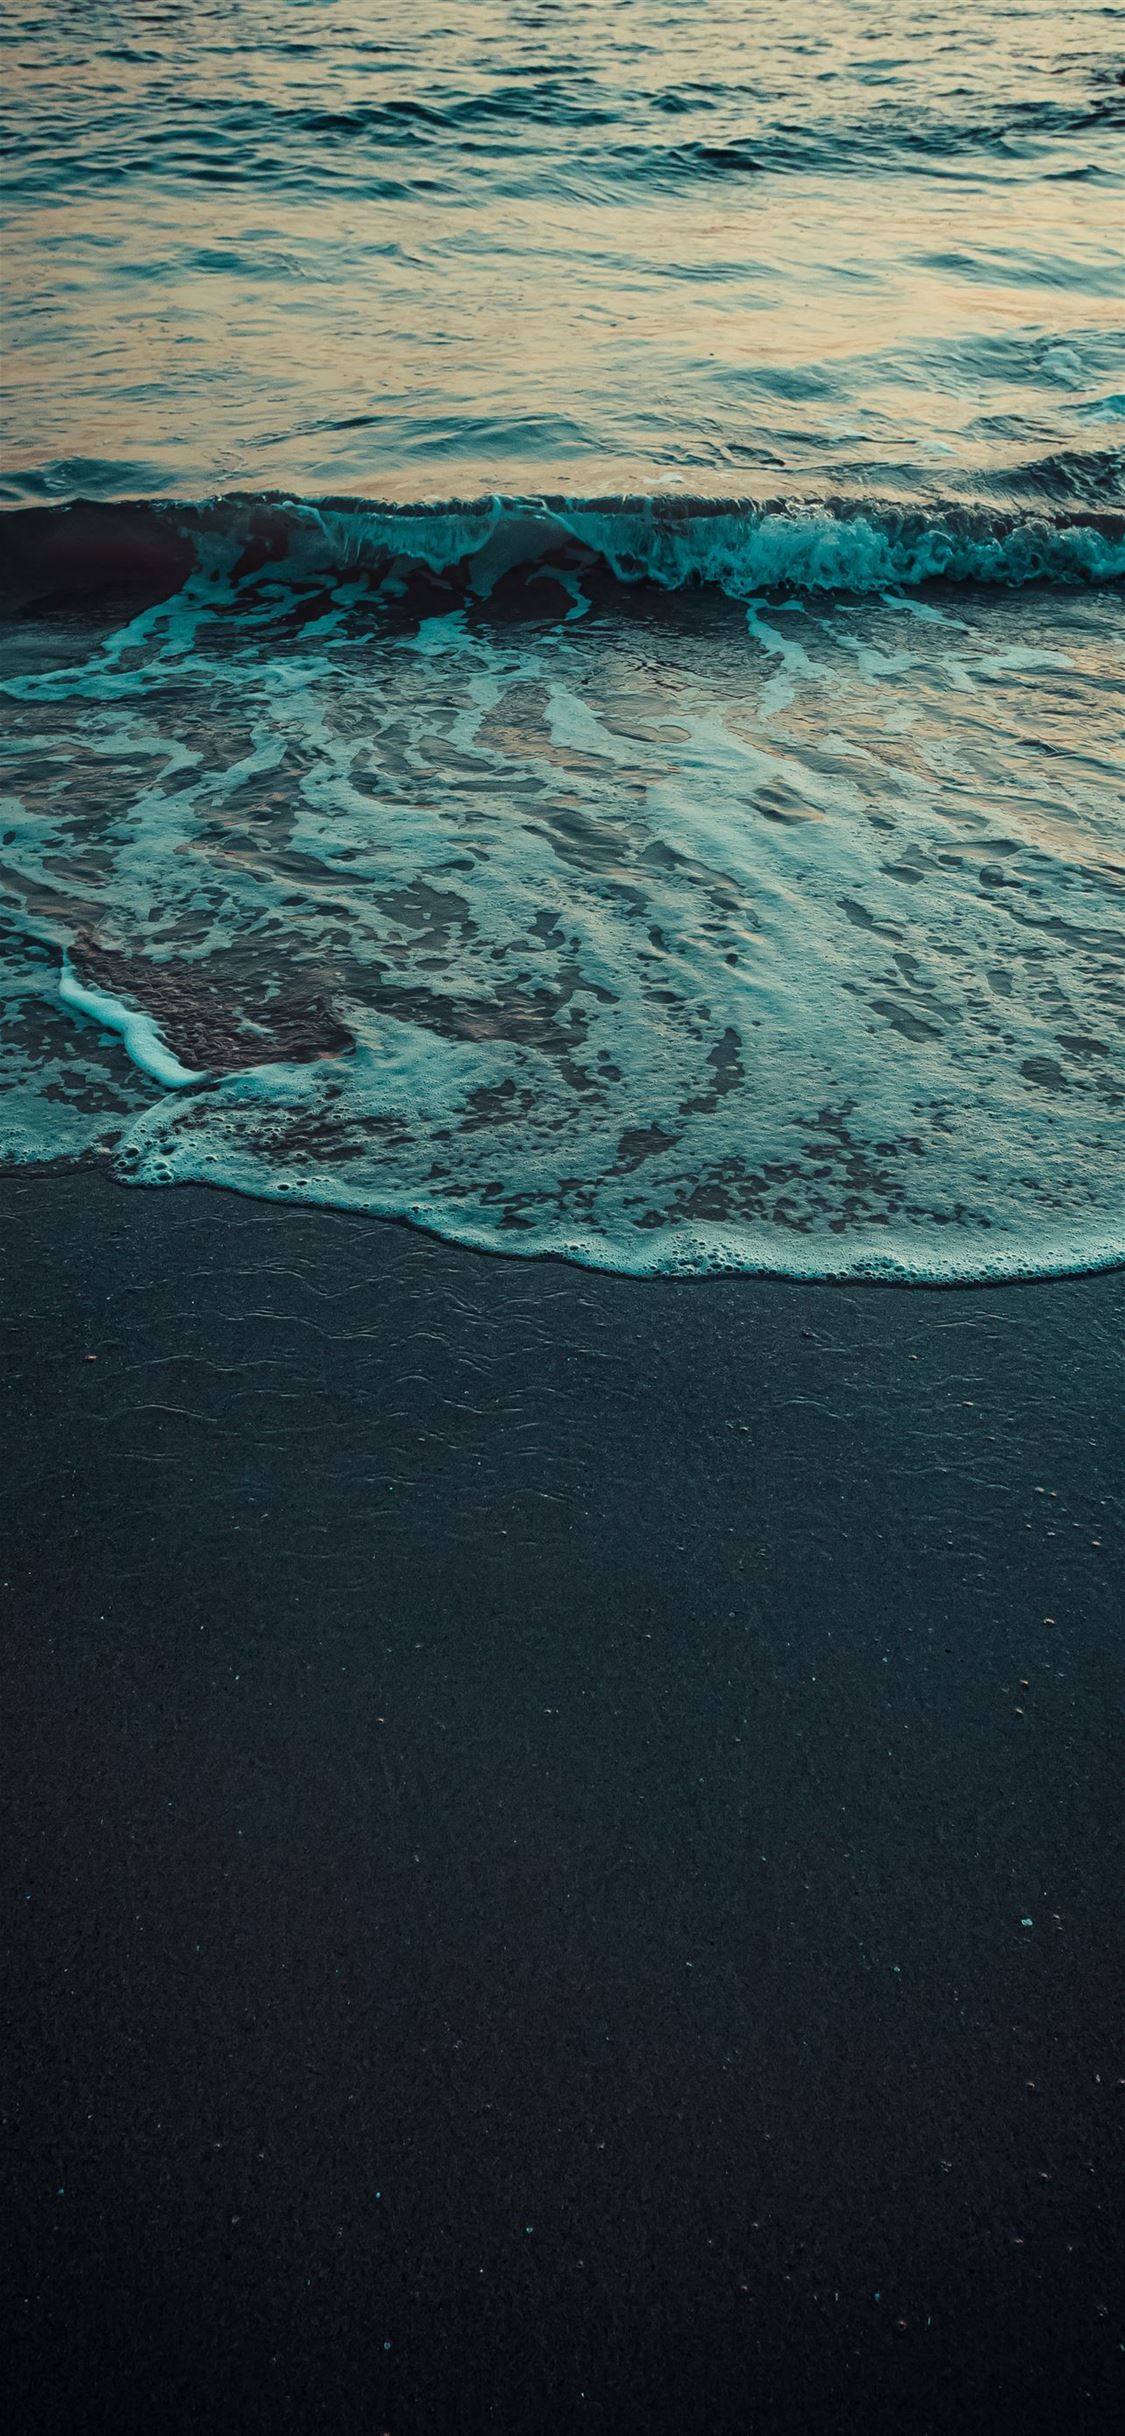 ocean waves crashing on shore during daytime iPhone Wallpapers Free